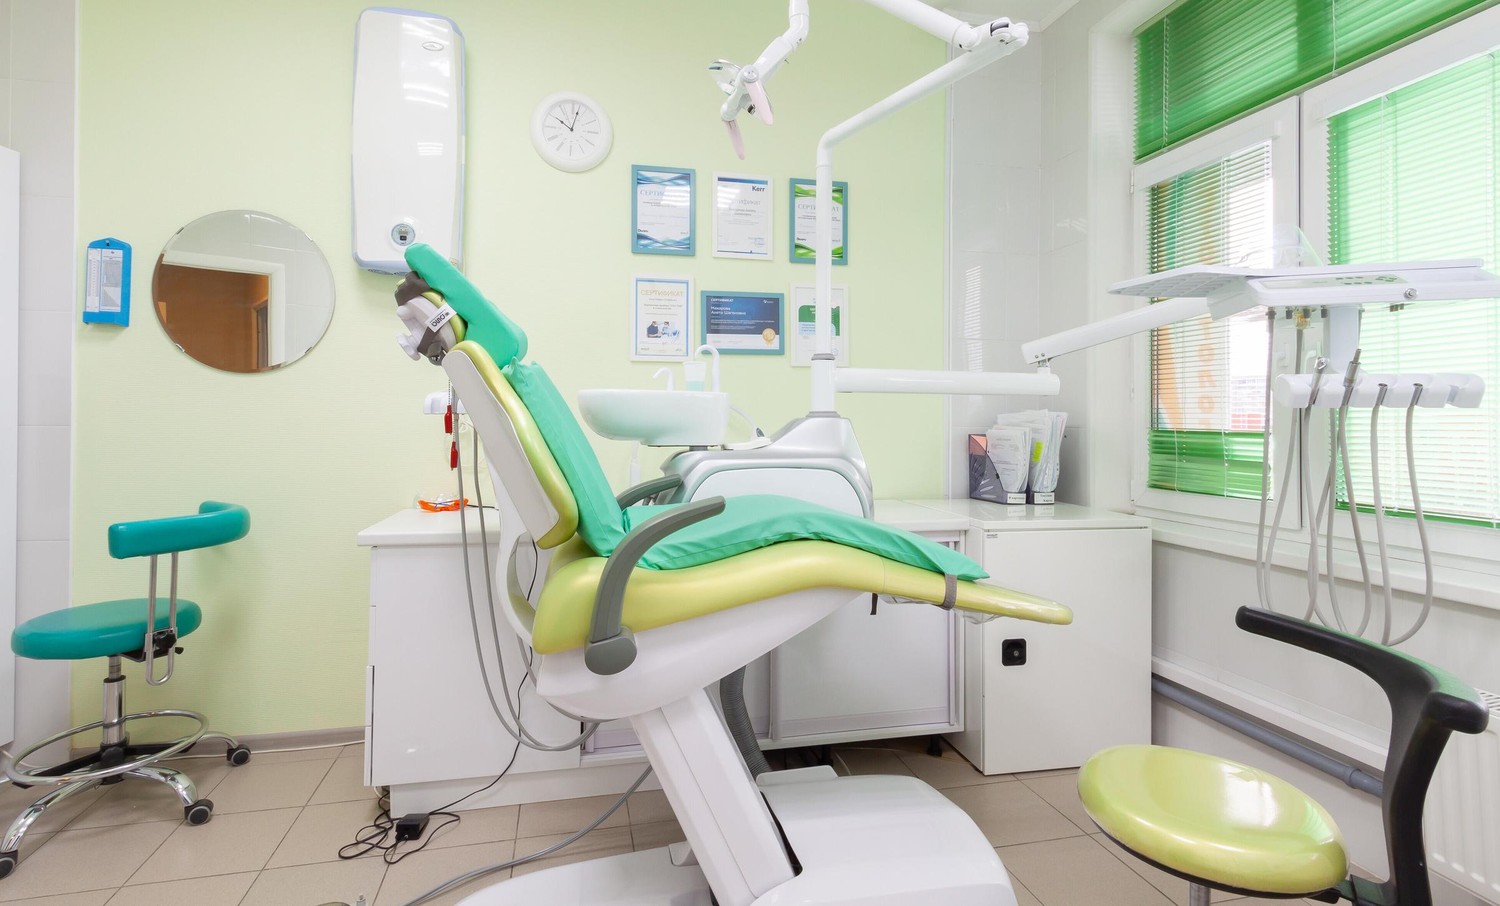 МКМ Медицина - Найдите проверенную стоматологию Yull.ru